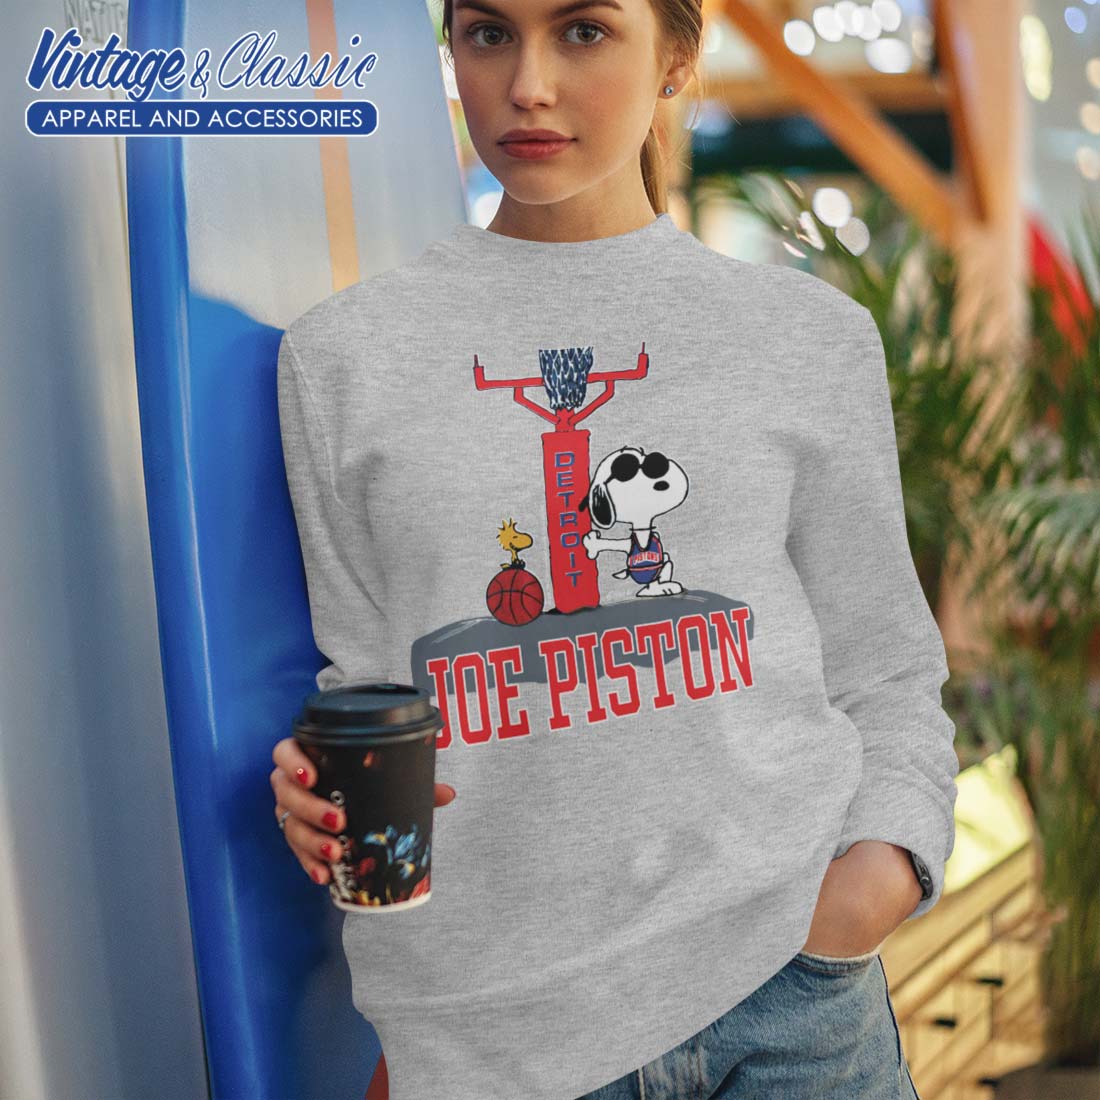 Warren Lotas x Detroit  Motorcade  T-shirt | NBA shirt, Detroit Pistons  shirt, NBA vintage - UNISEX